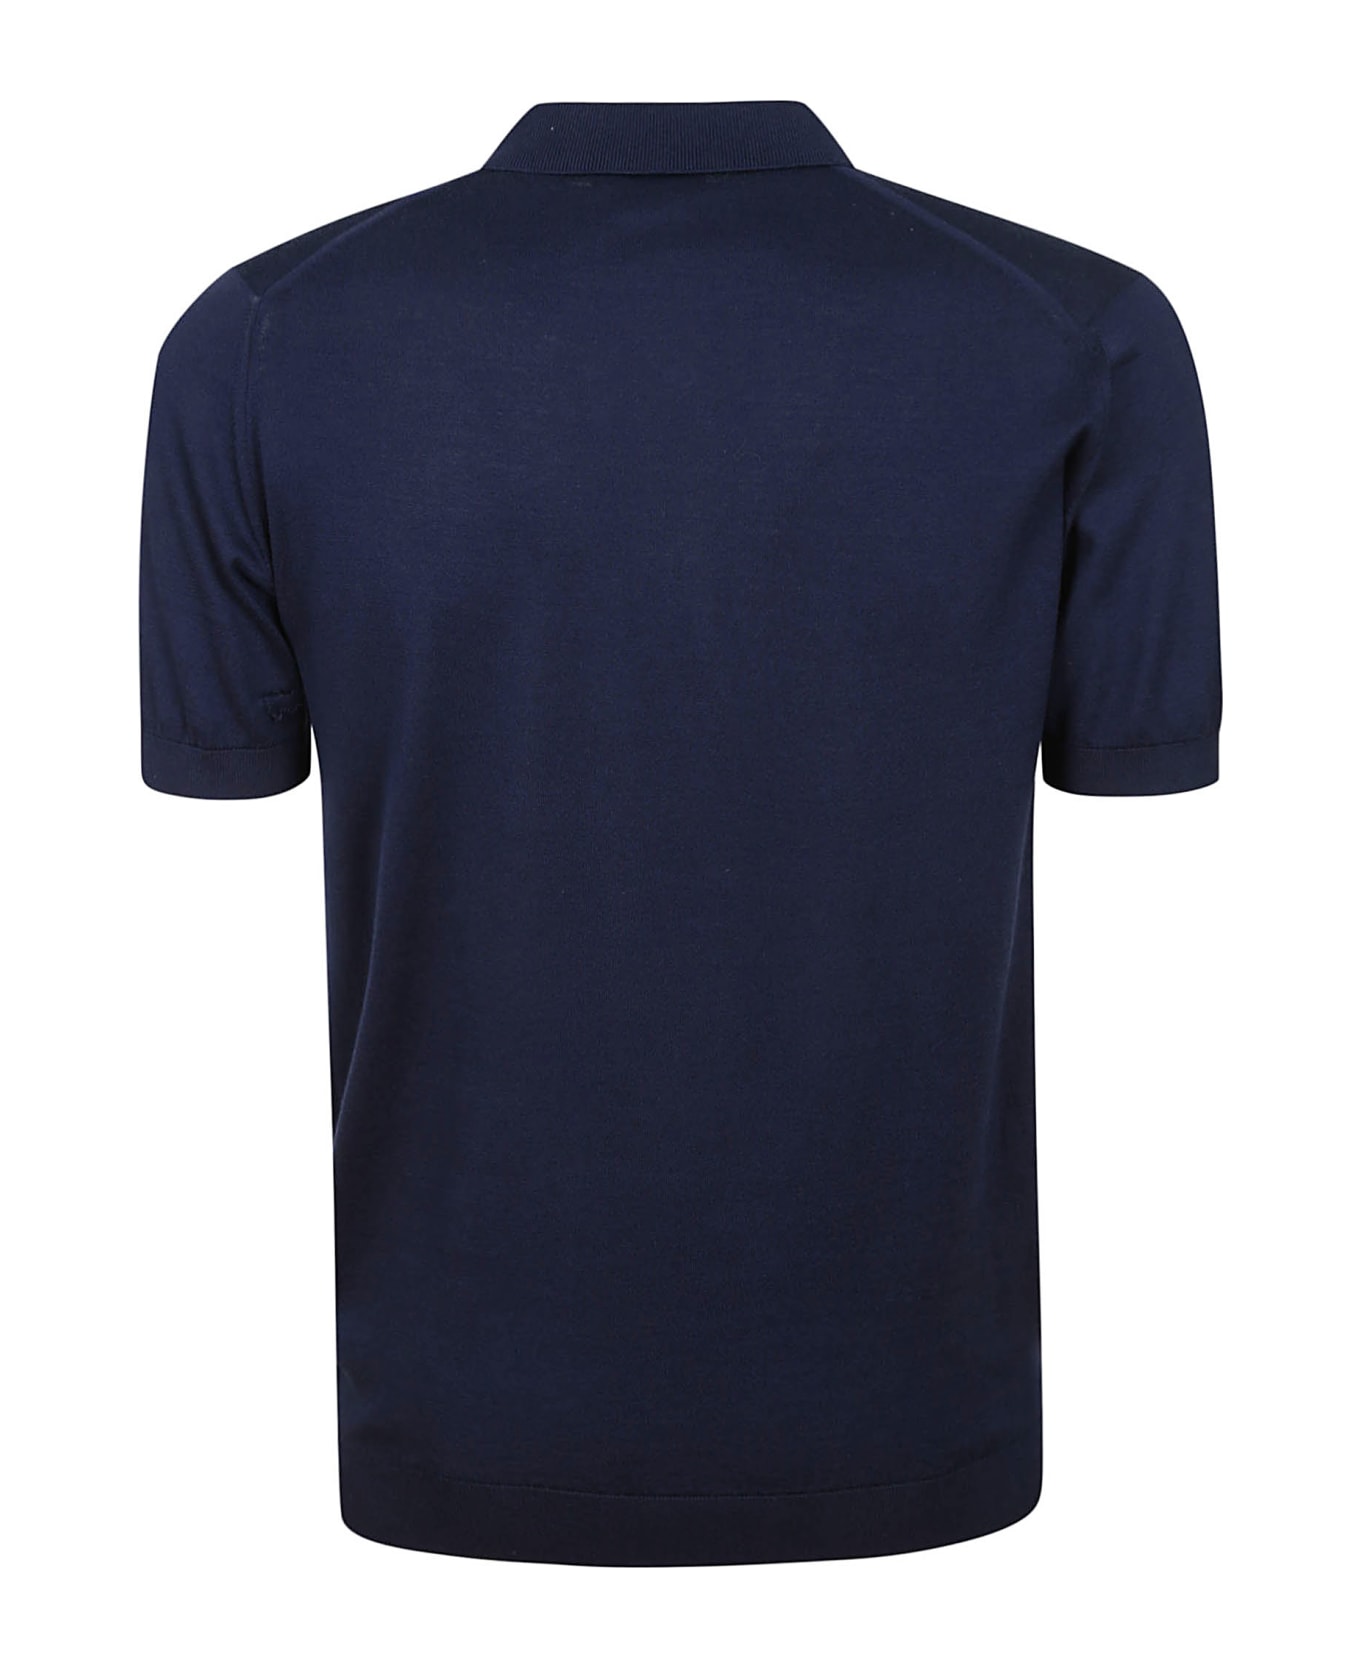 John Smedley Adrian Shirt Ss - French Navy ポロシャツ